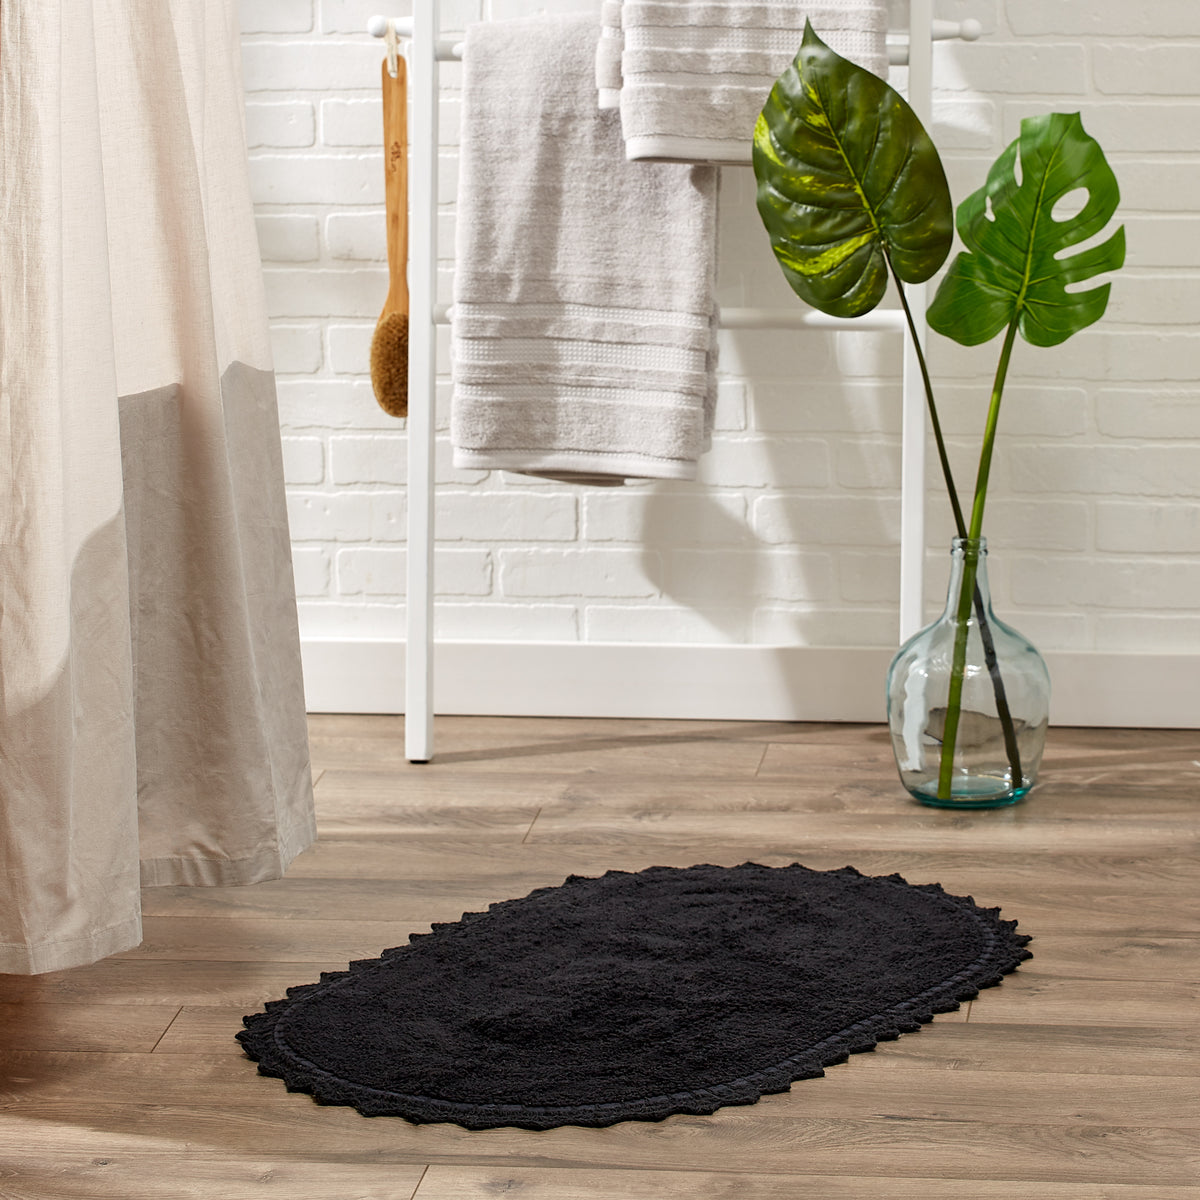 Honey Gold Small Oval Crochet Bath Mat – DII Home Store